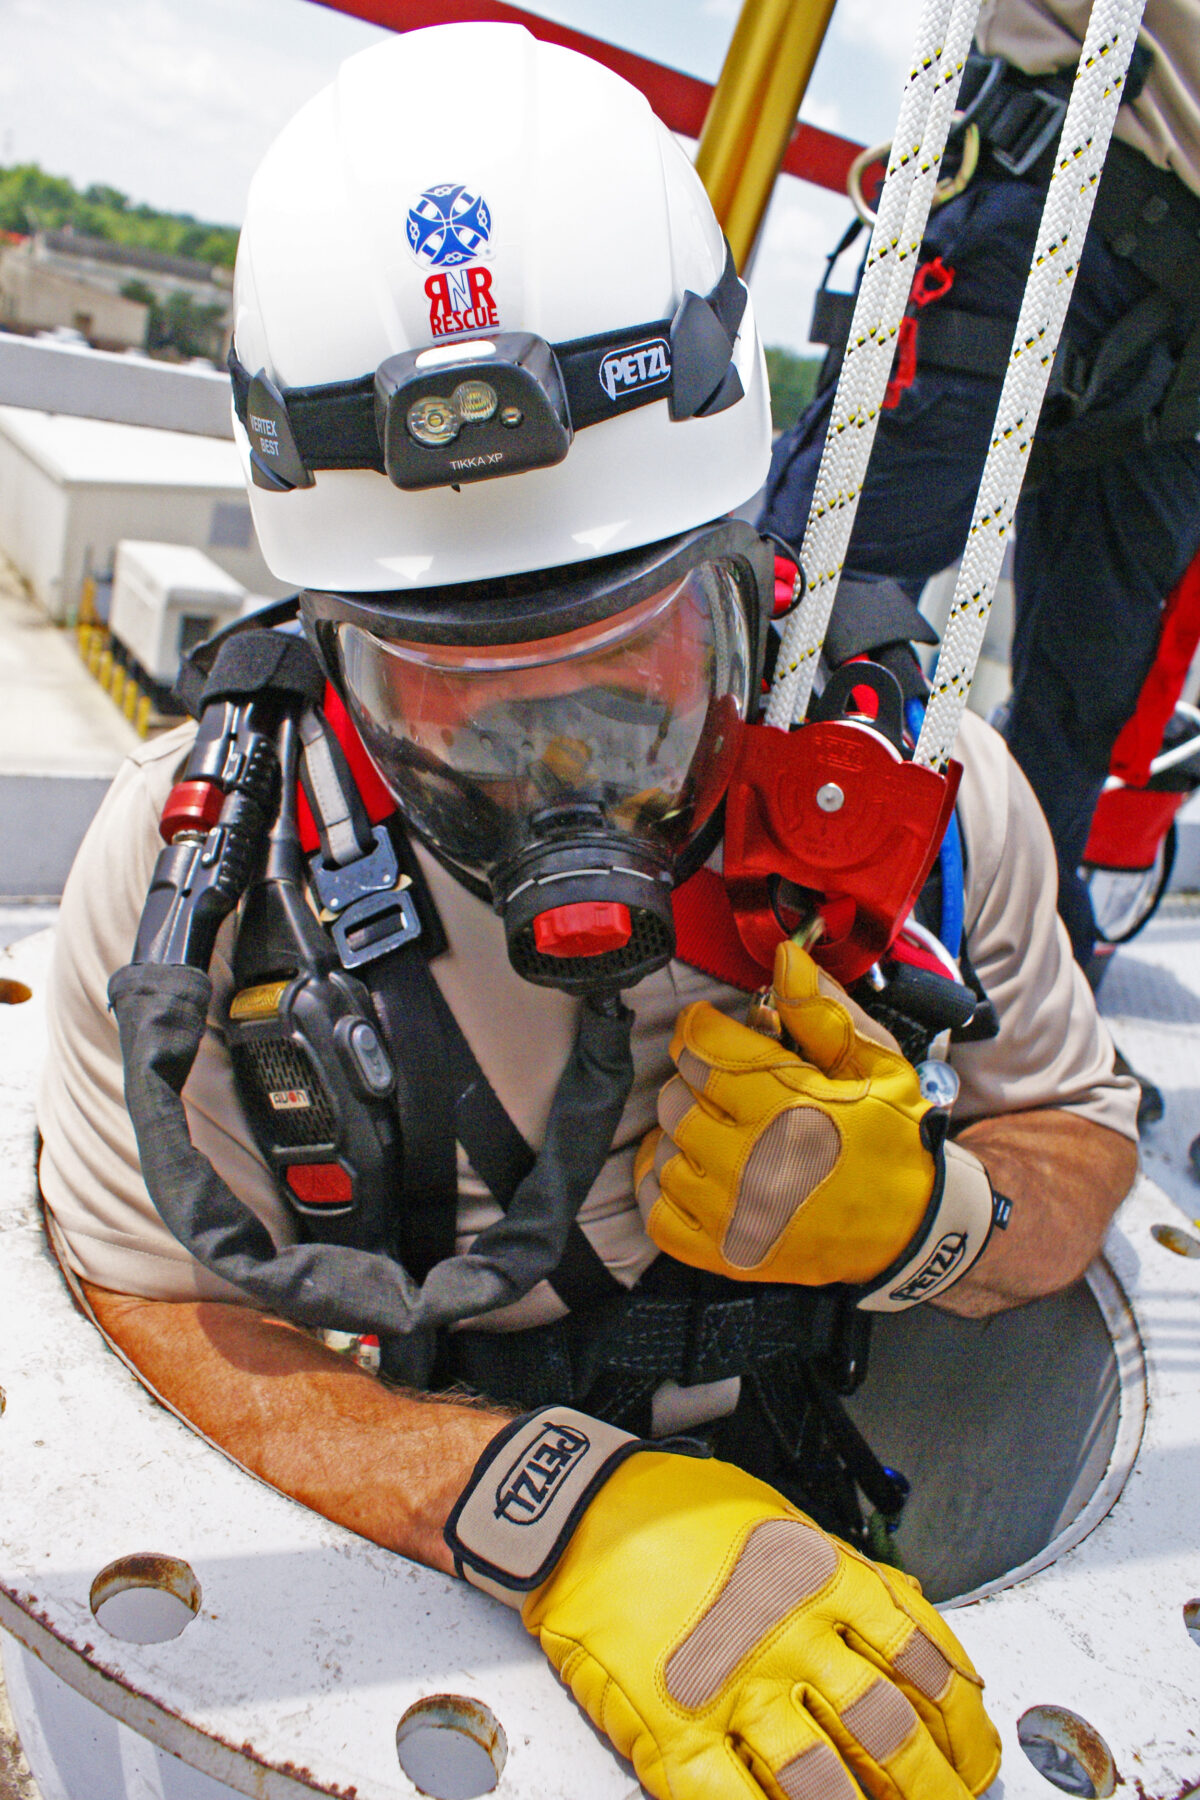 Petzl Technical Partner - RNR Rescue - engineer